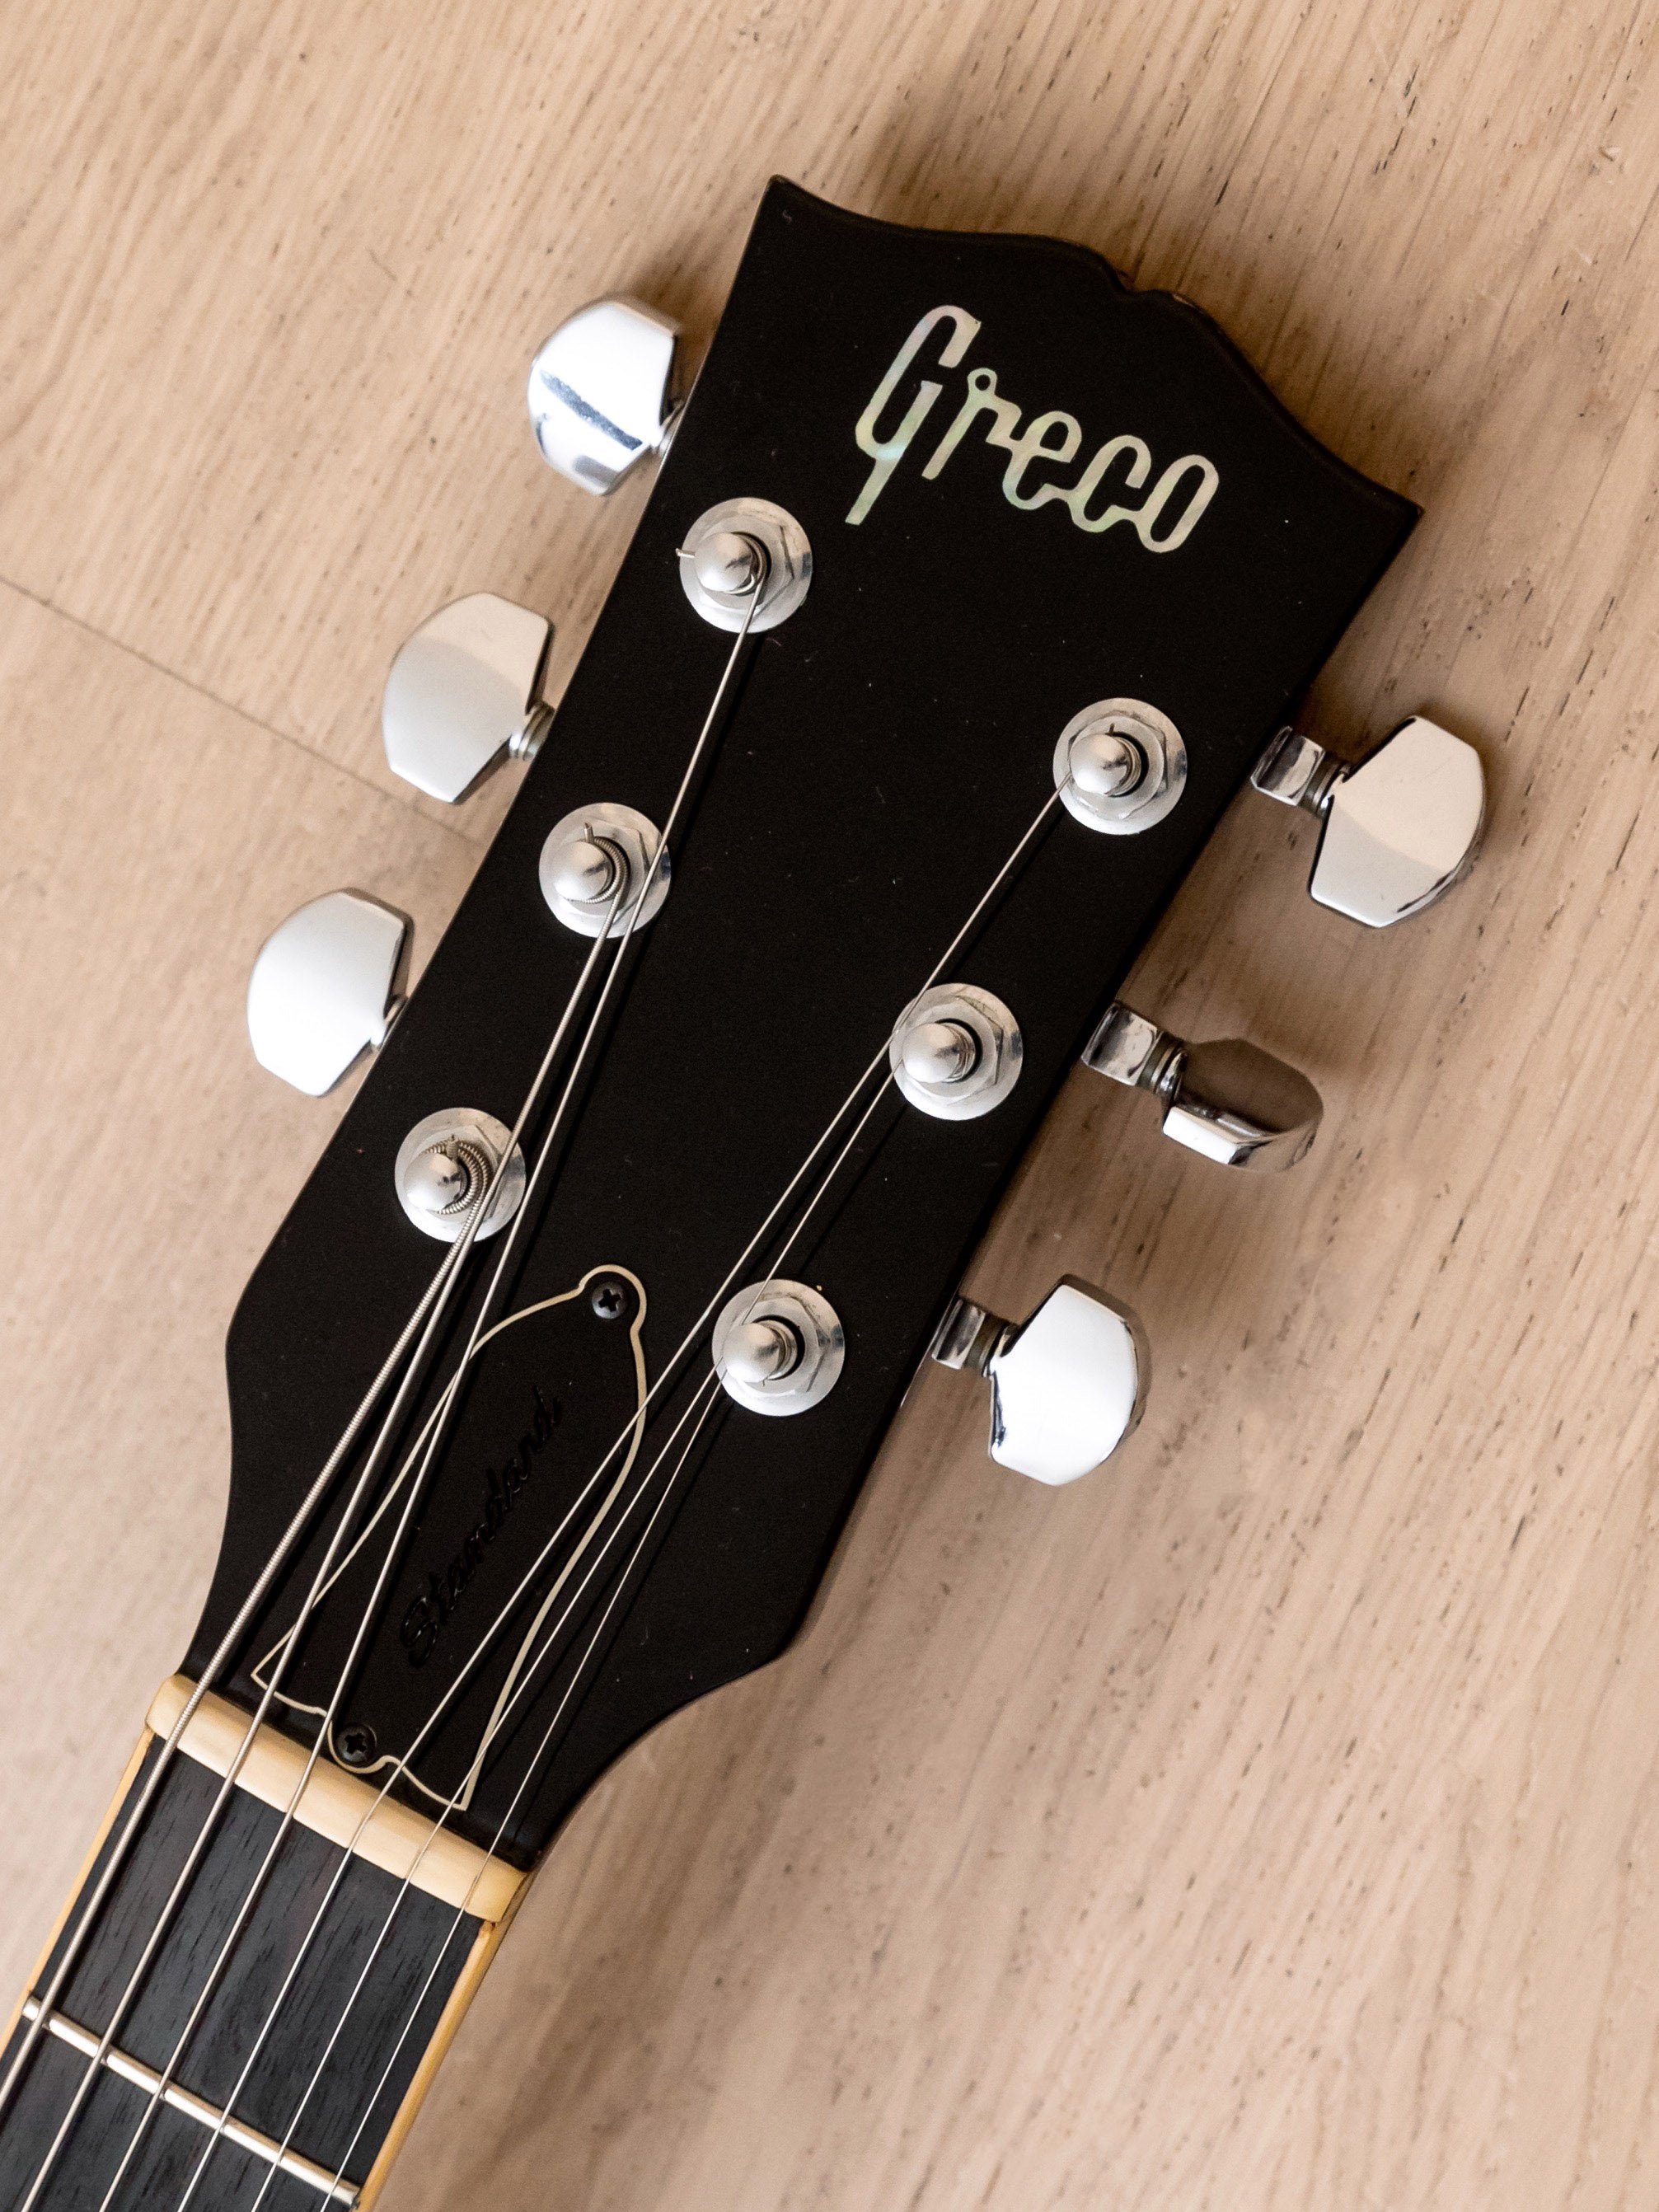 1975 Greco EG700 Standard Vintage Guitar Ebony w/ Case & Maxon U-2000, Japan Fujigen